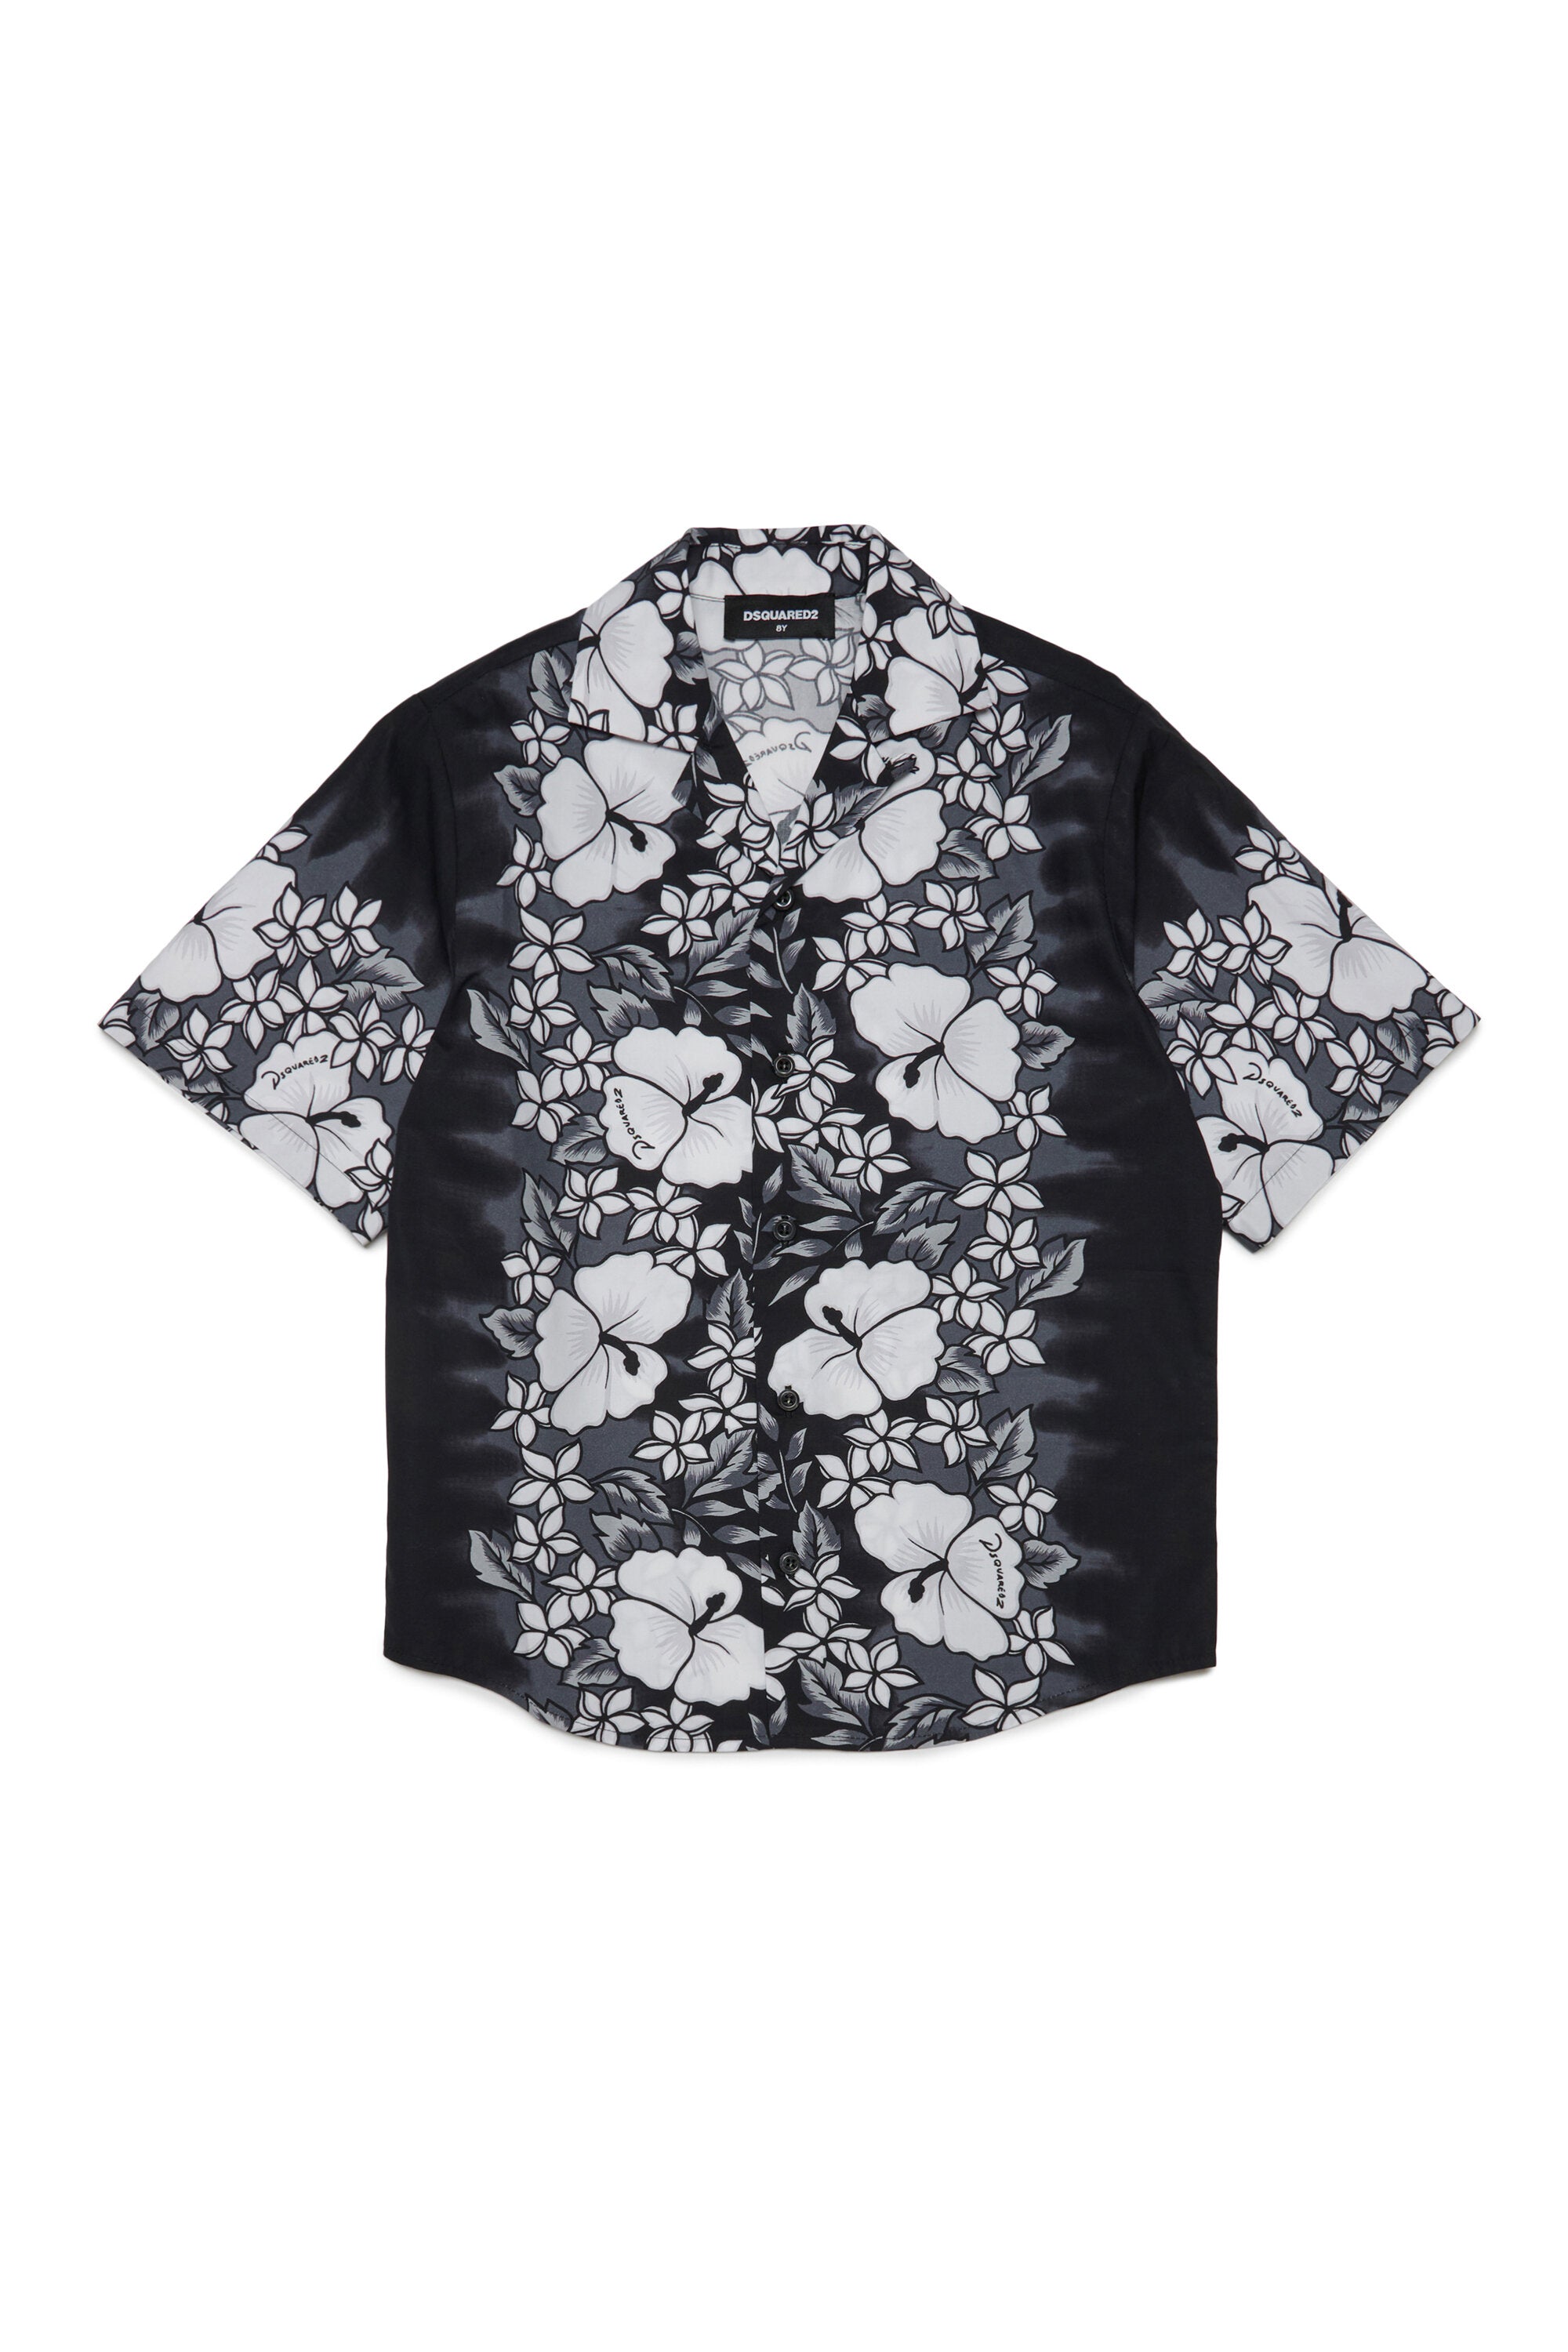 Hawaiian shirt with floral print